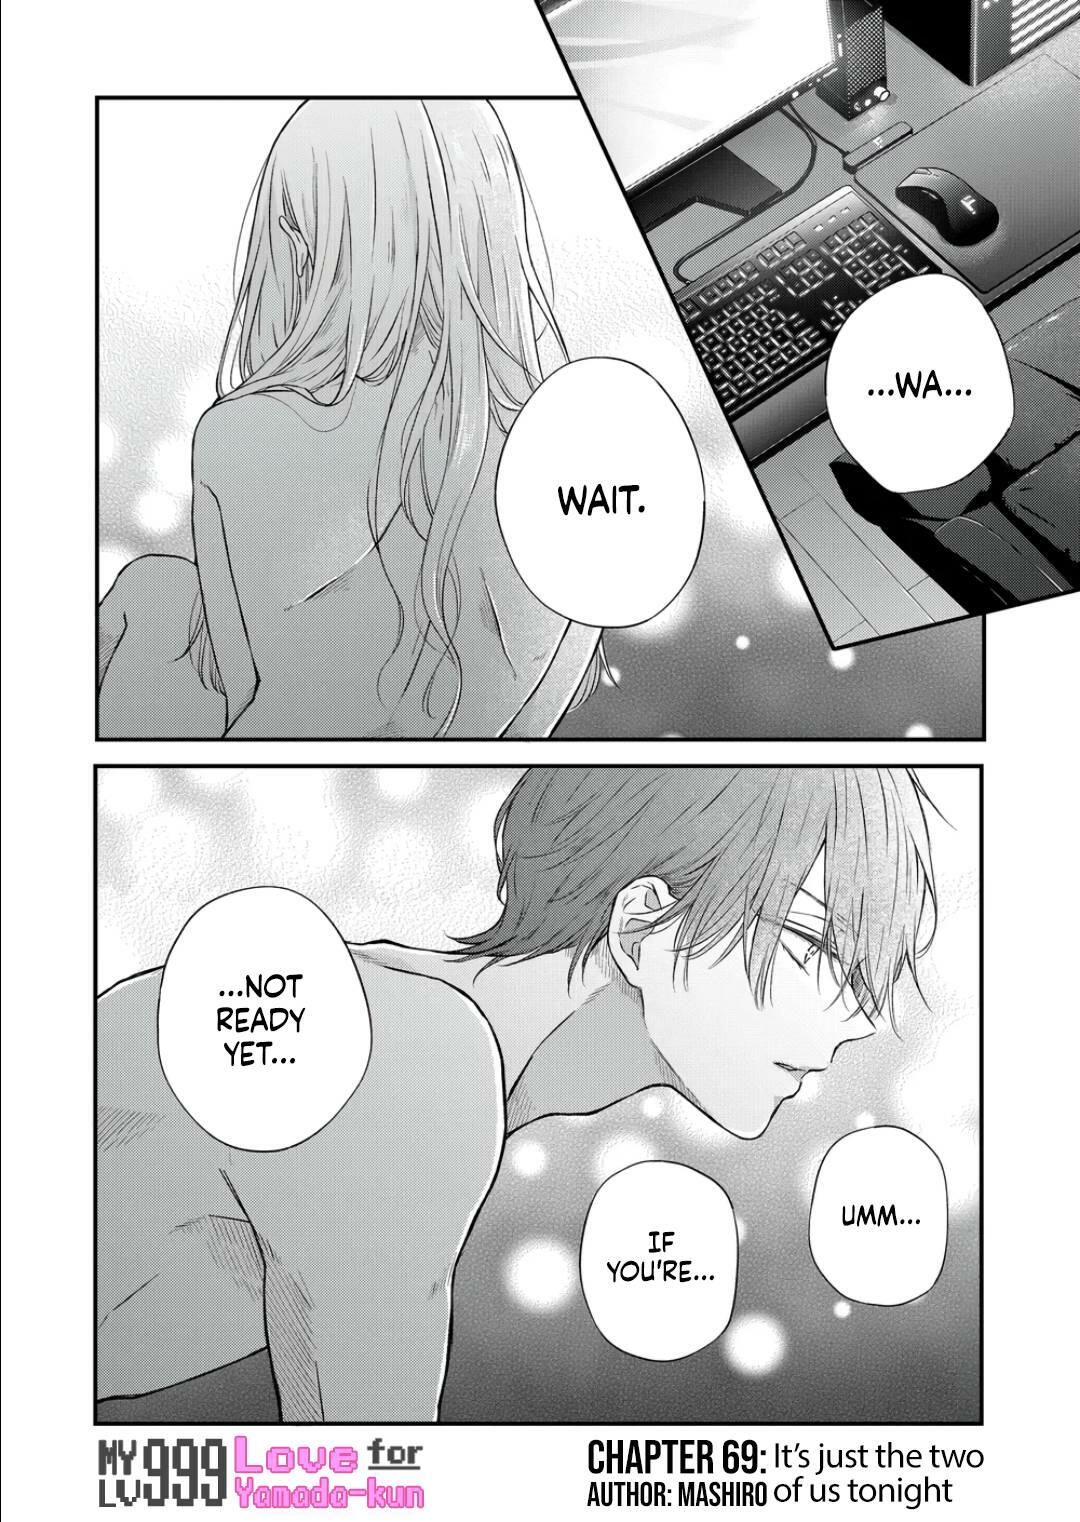 My Love Story with Yamada-kun at Lv999 (manga)